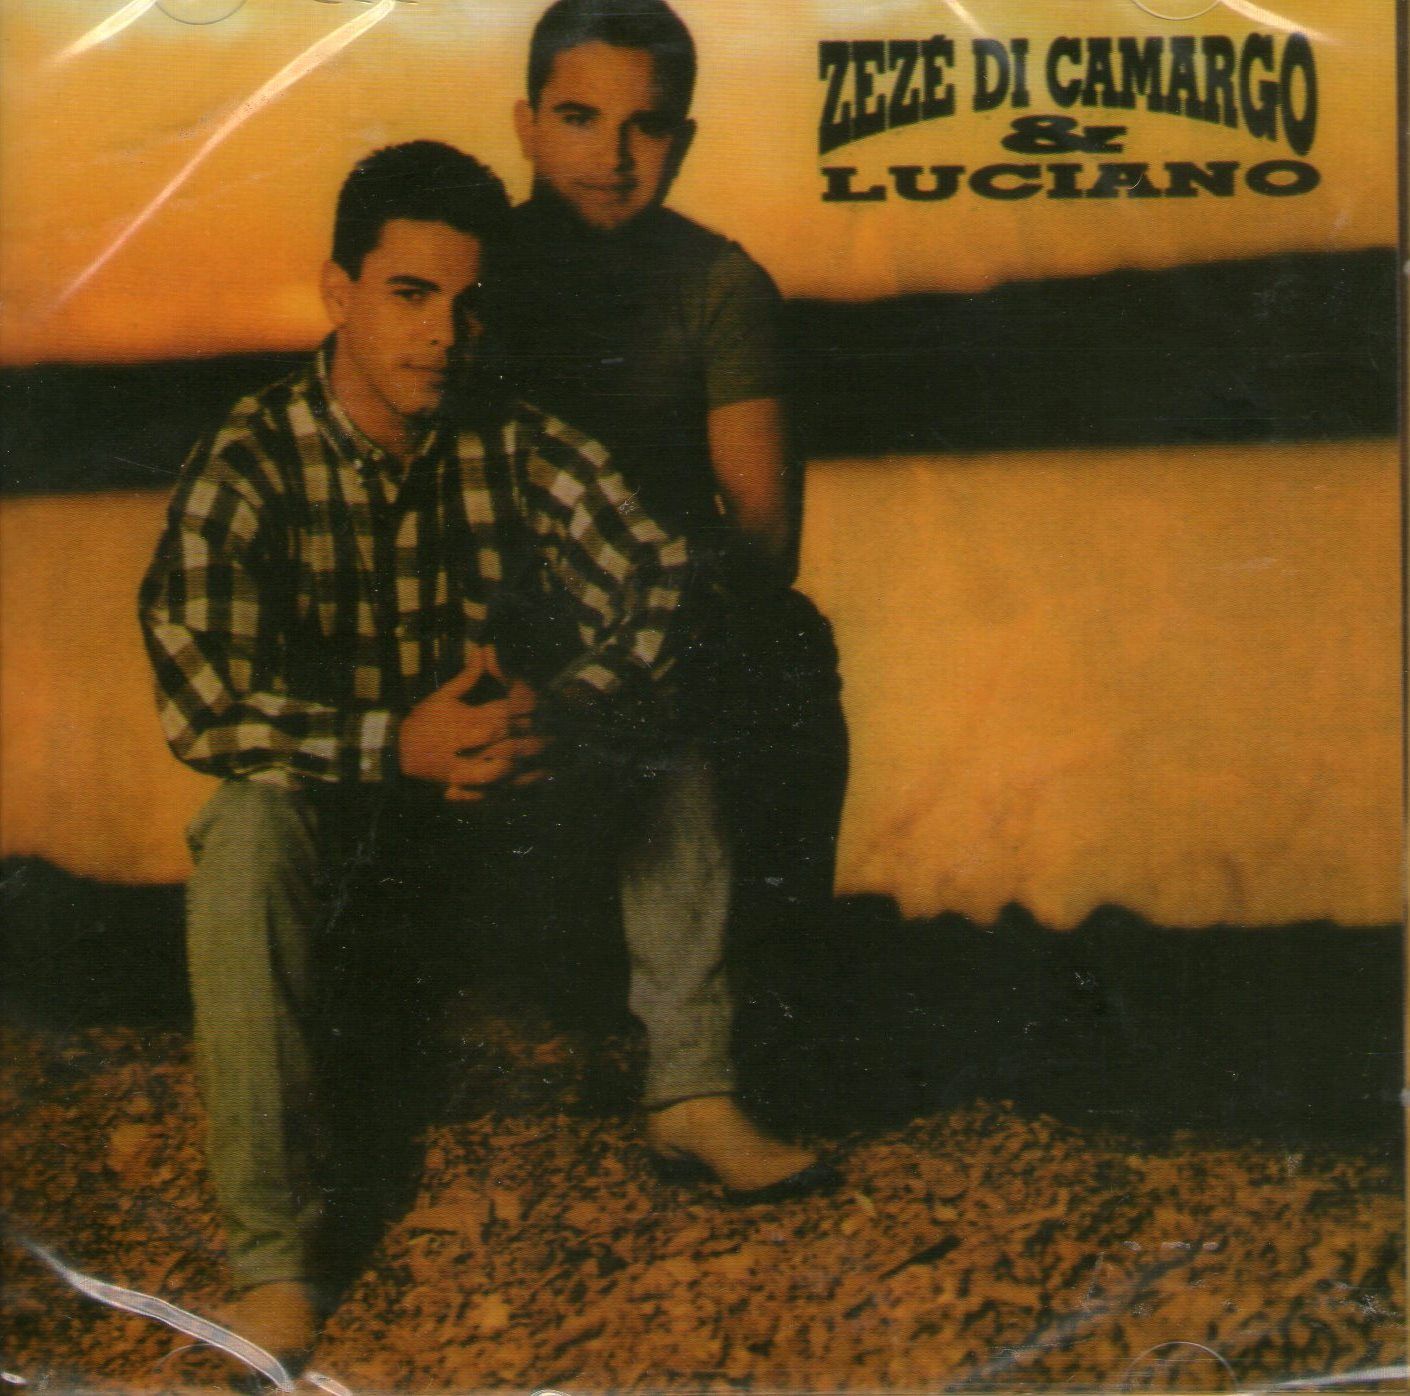 Zeze di camargo e luciano antigas cd completo sua musica Zeze Di Camargo E Luciano Palco Mp3